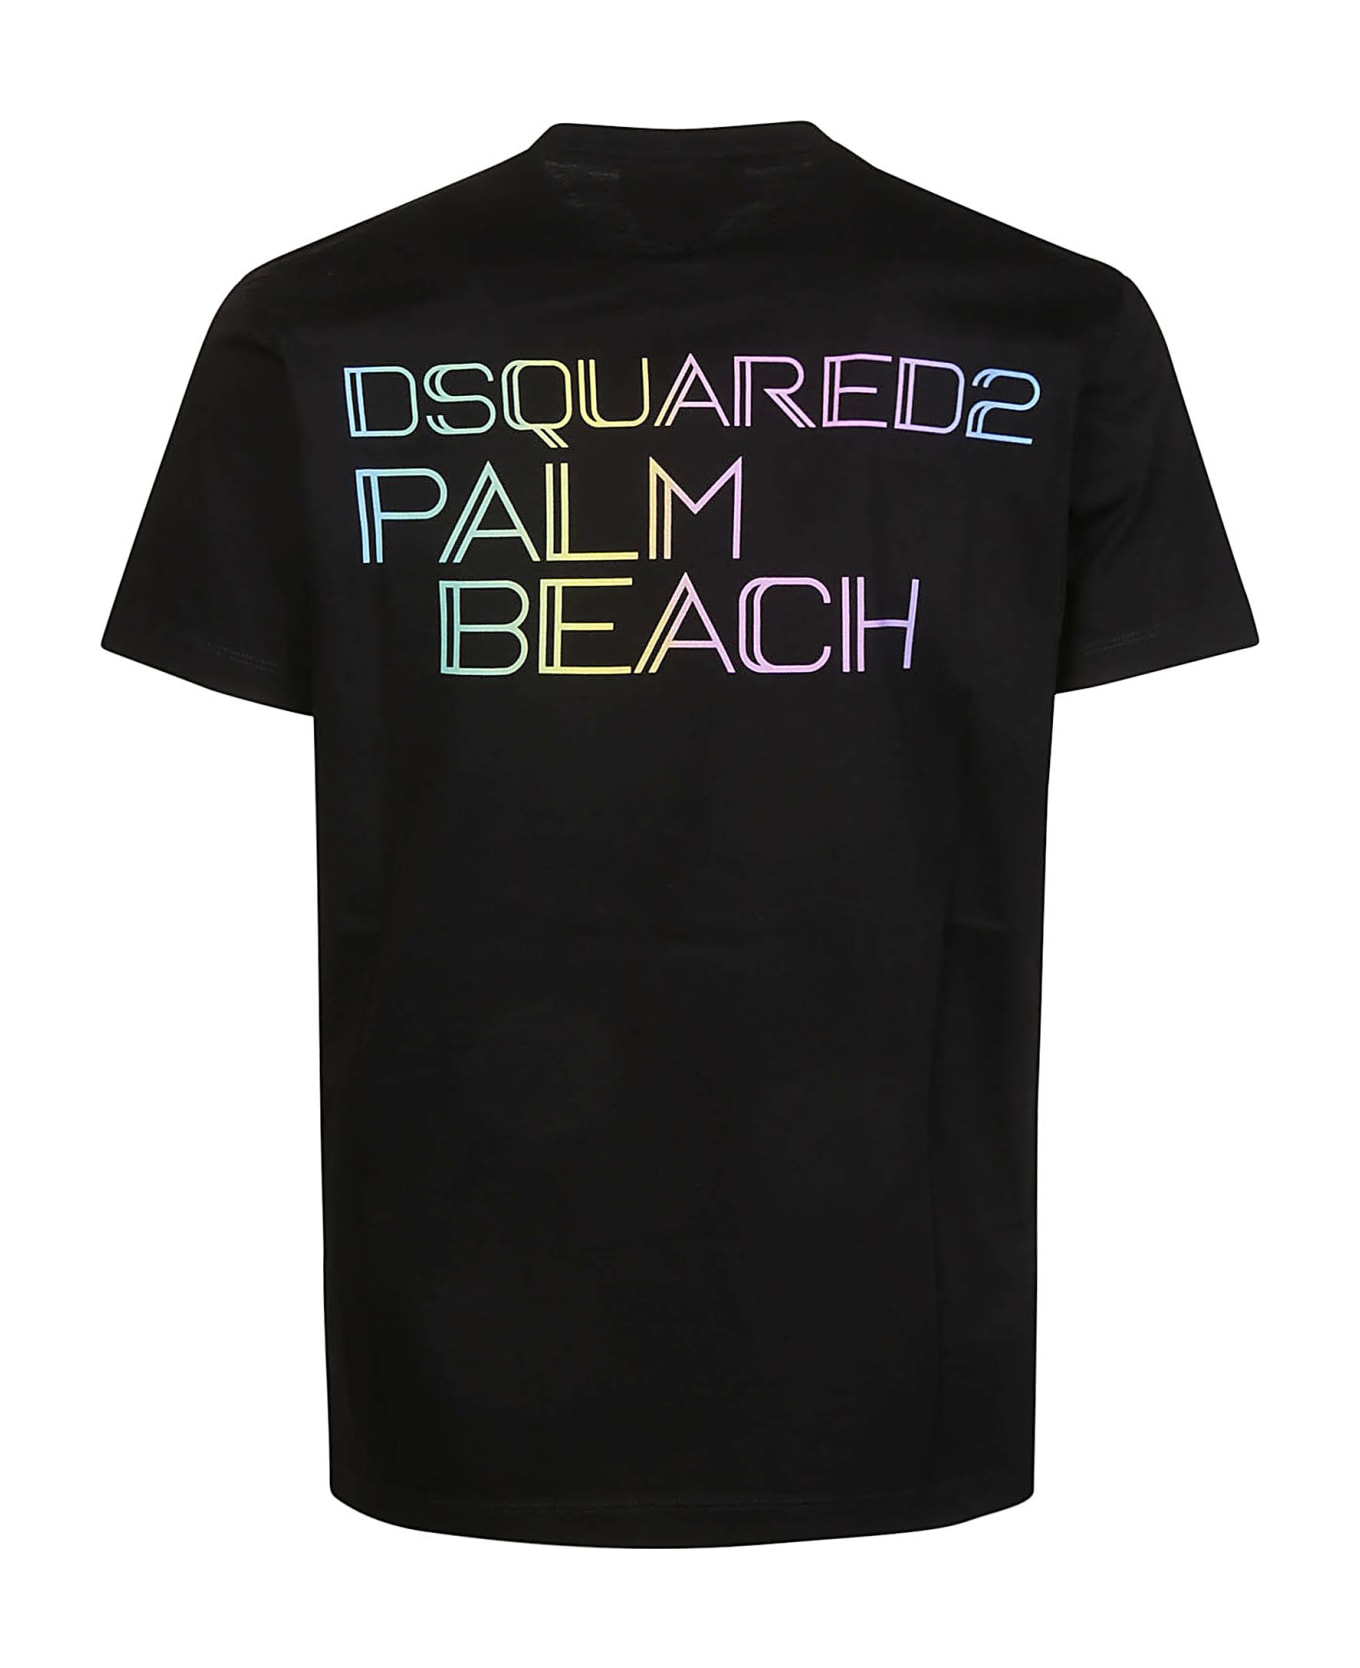 Dsquared2 Cool Fit T-shirt - Black